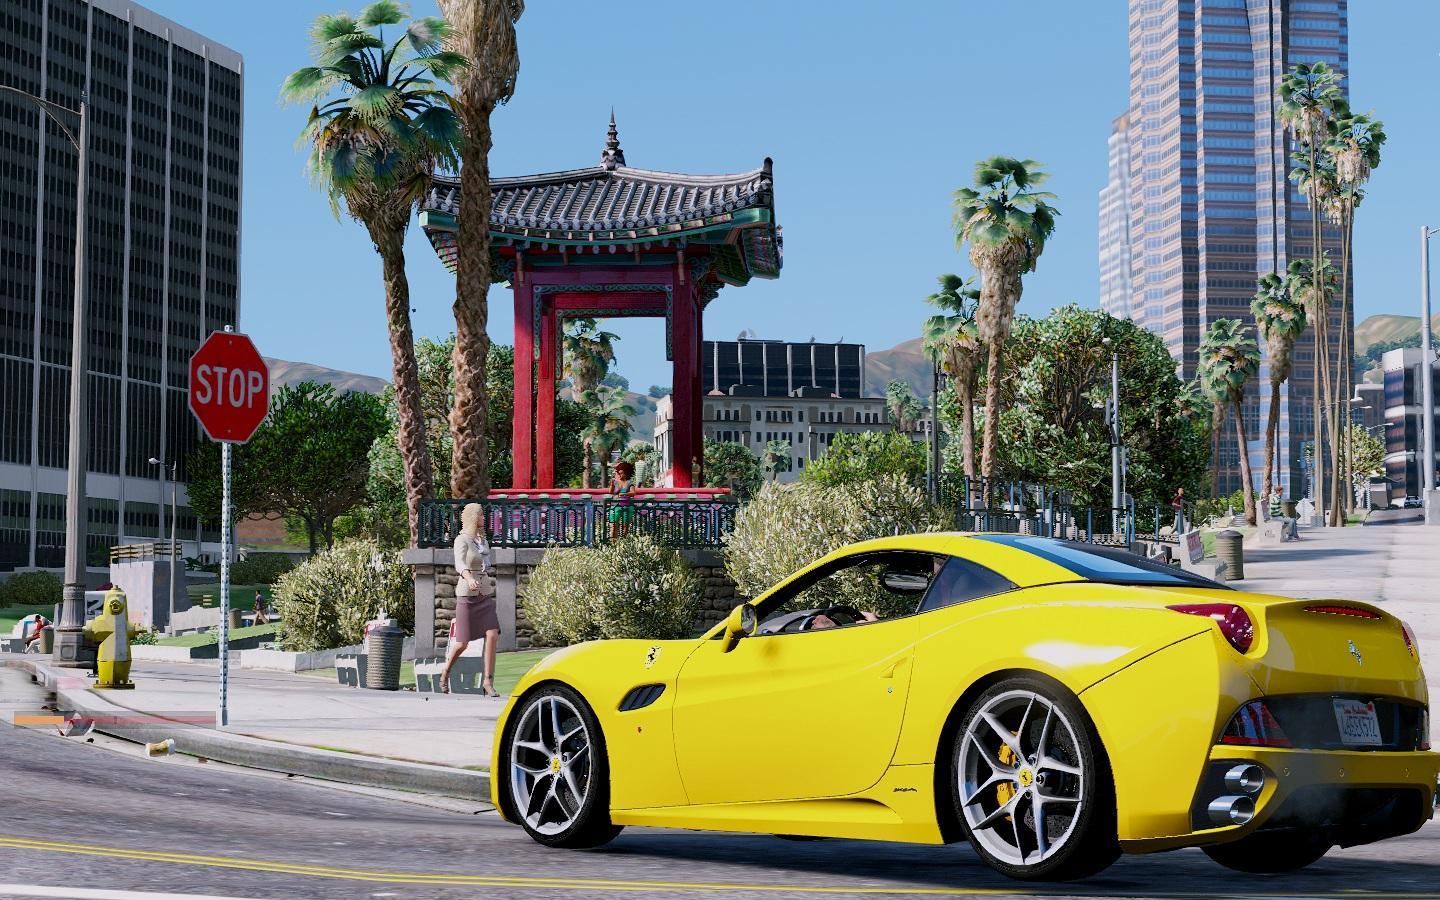 Ferrari California 2013 Edition Handling